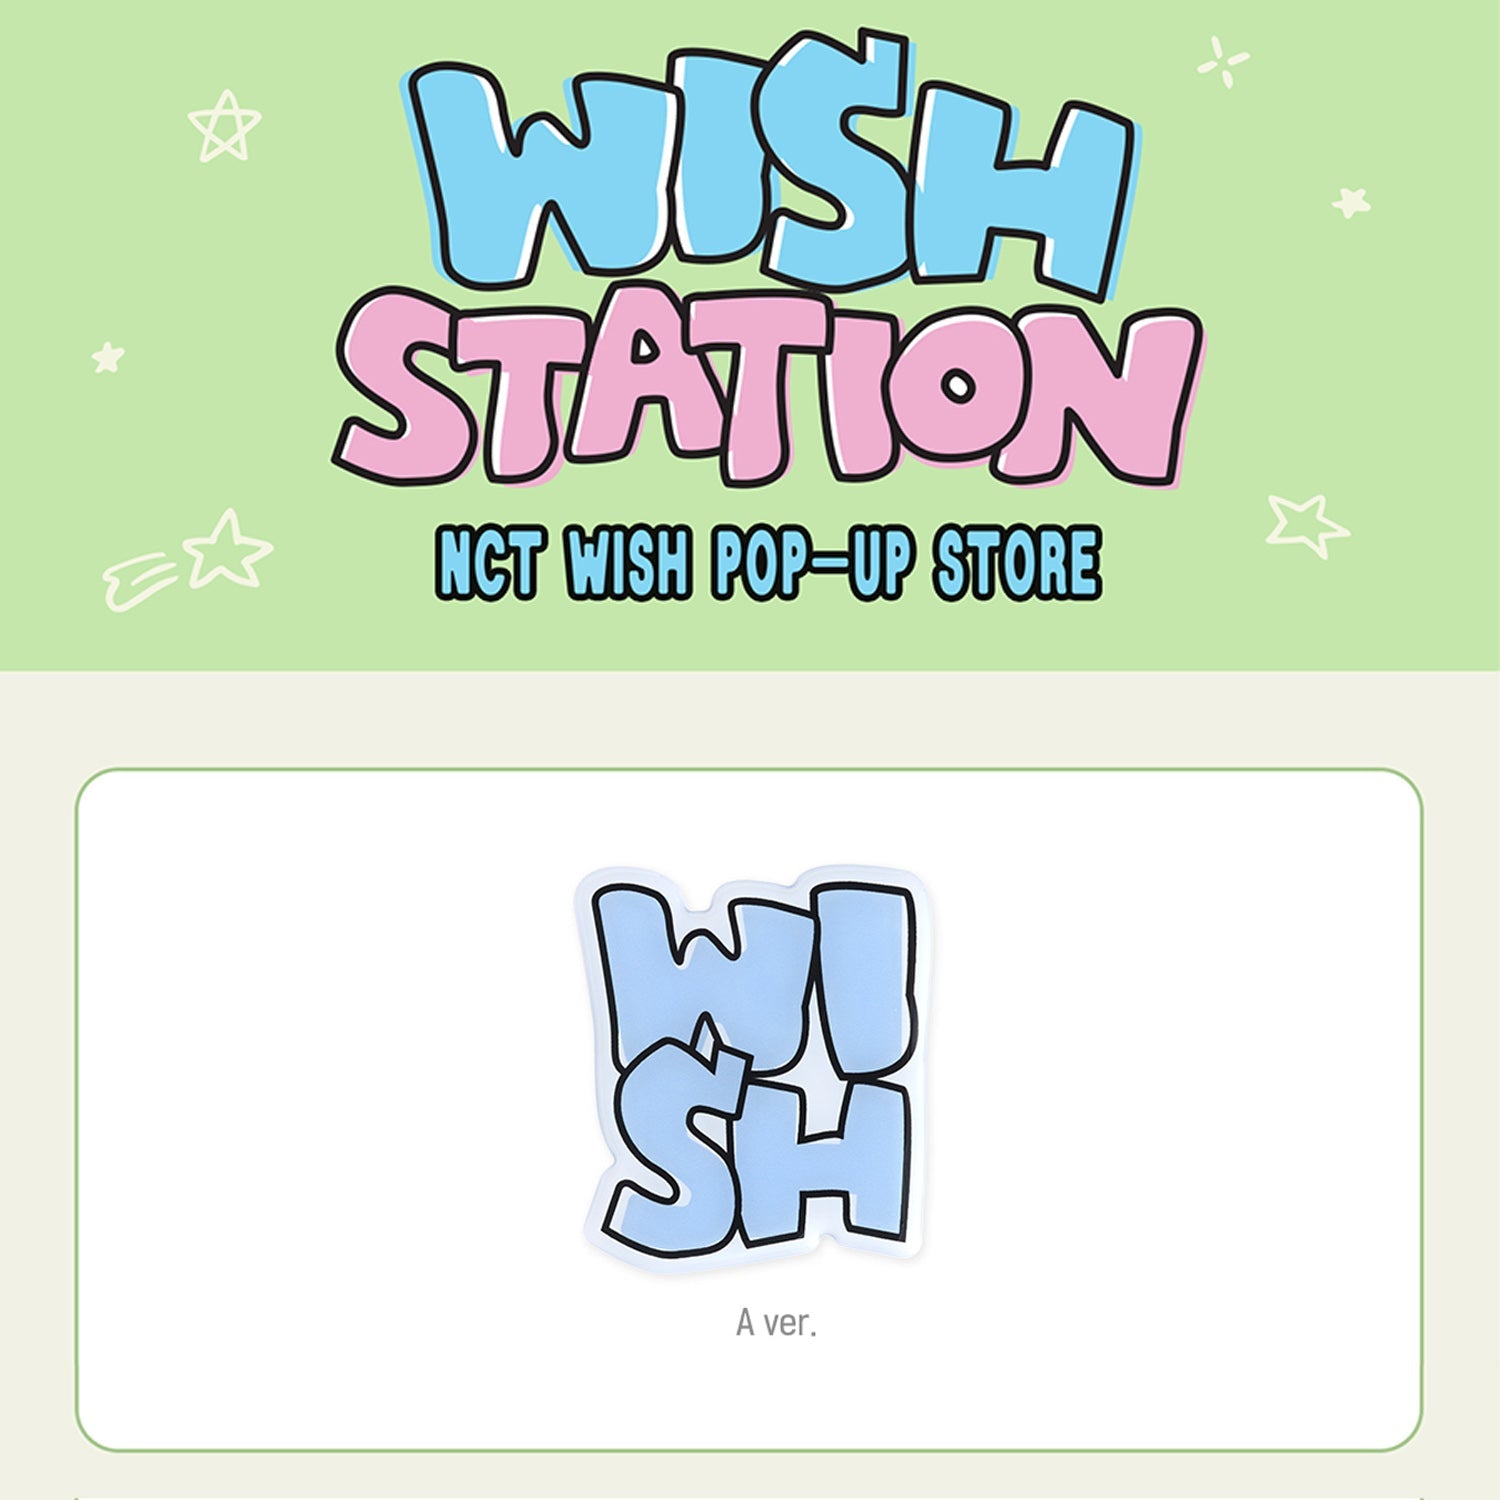 NCT WISH POP-UP GRIPTOK 'WISH STATION'